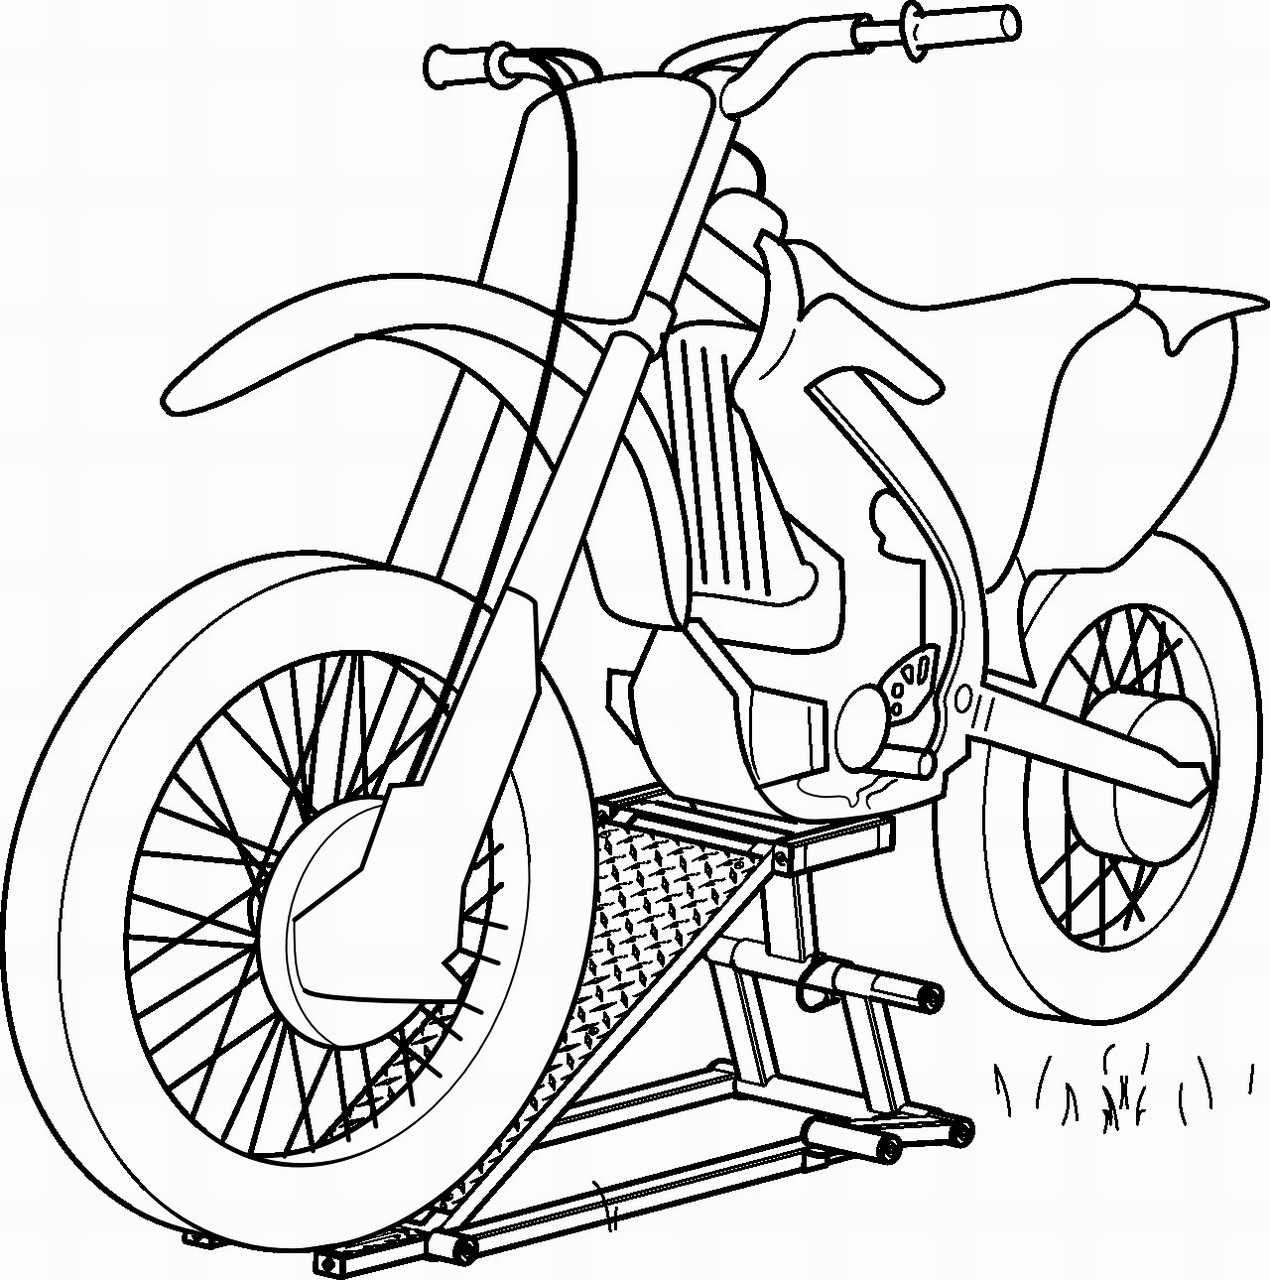 Omalovnka motorka k vytisknut na A4